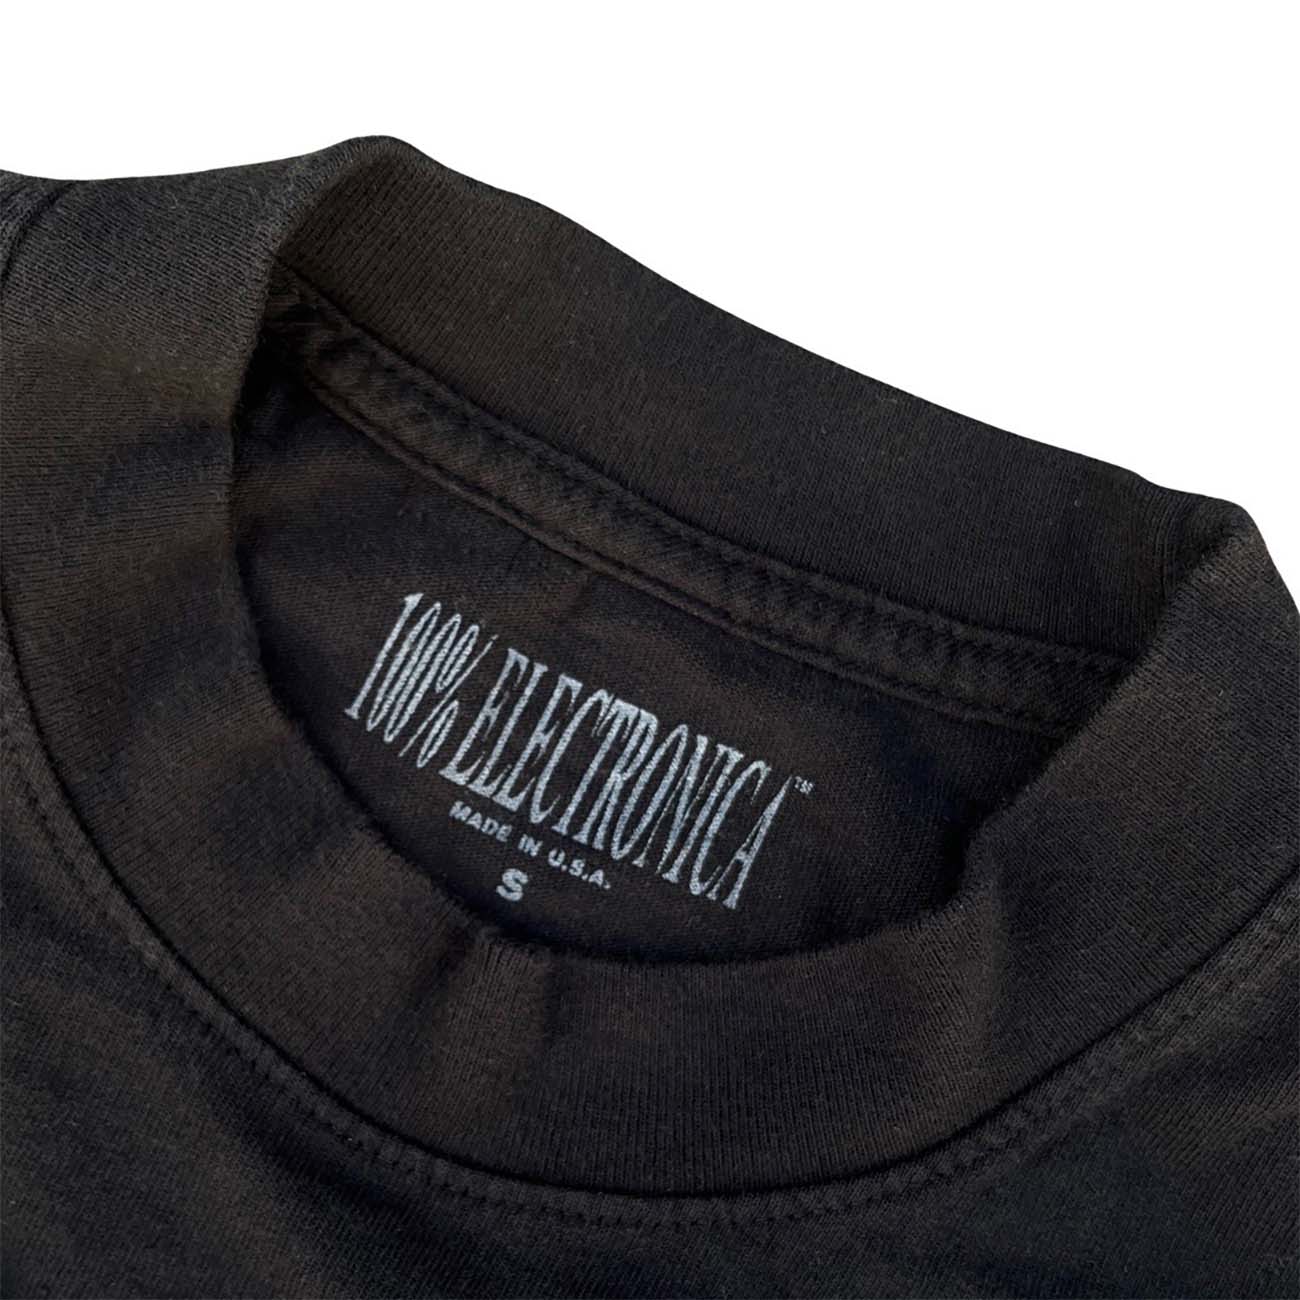 "Small Black" Distressed Logo T-Shirt